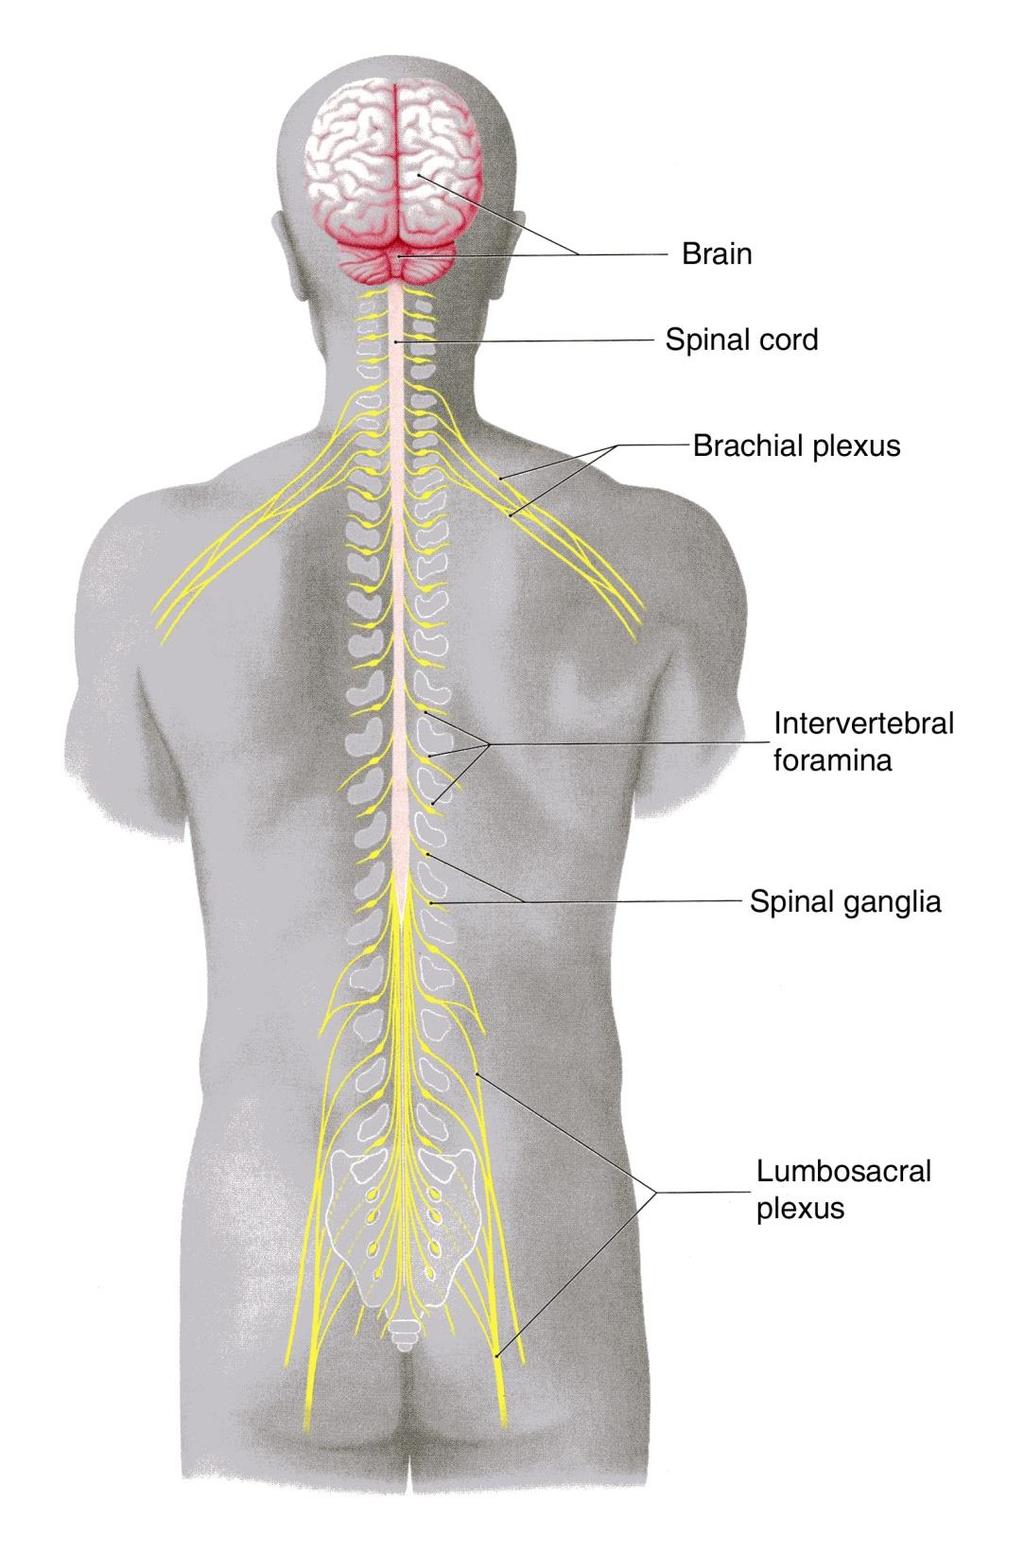 Spinal nerves supplying the upper or lower limbs form plexuses e.g. brachial or lumbar plexus.